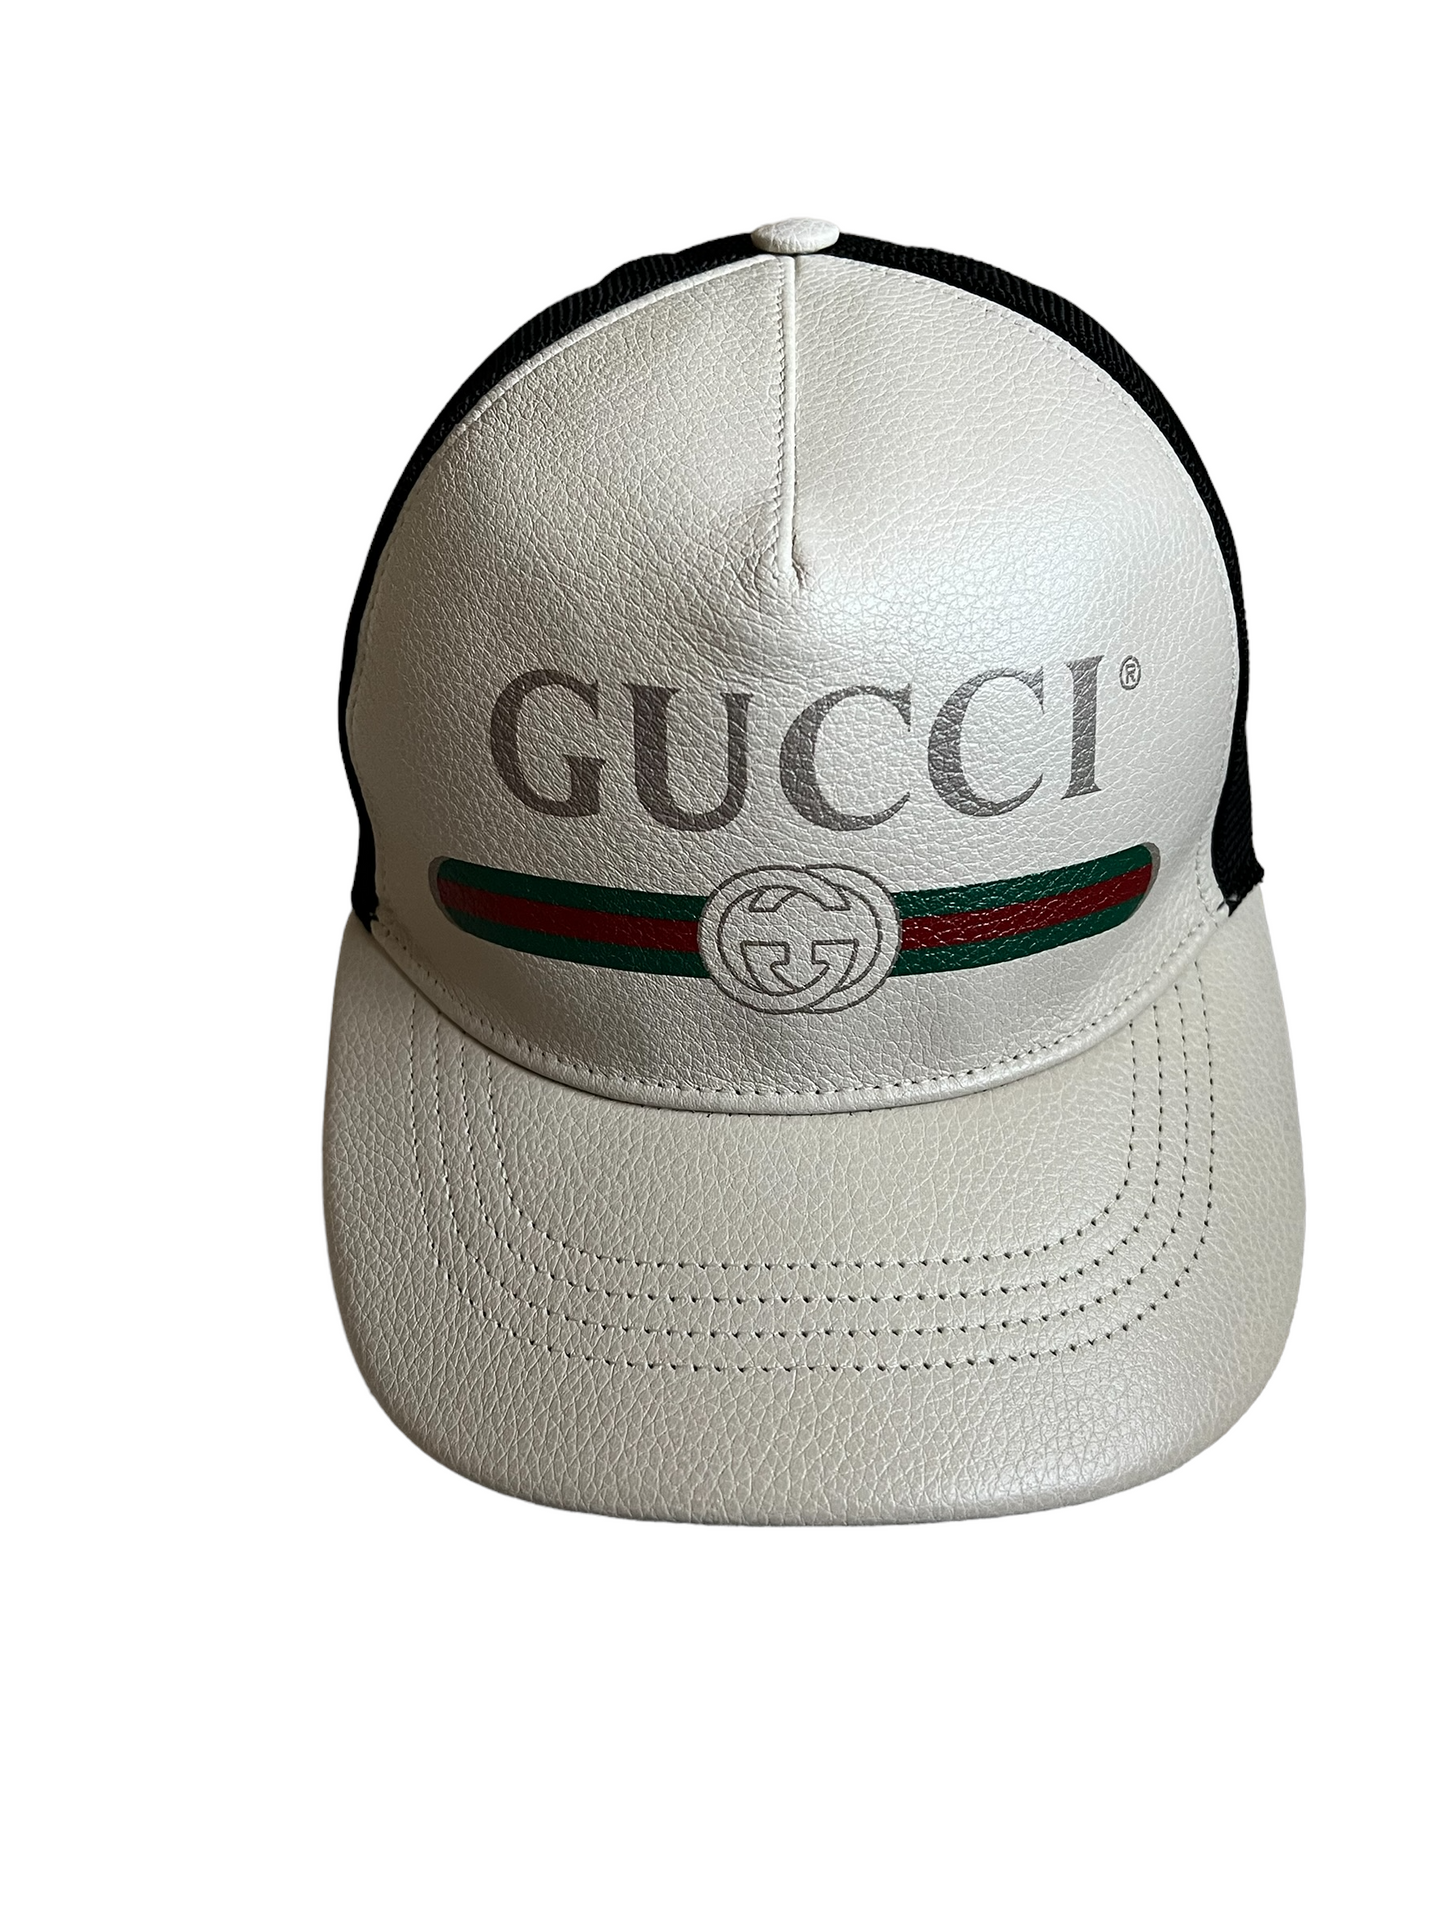 Gucci Cream Black Leather Logo Size S Trucker Hat